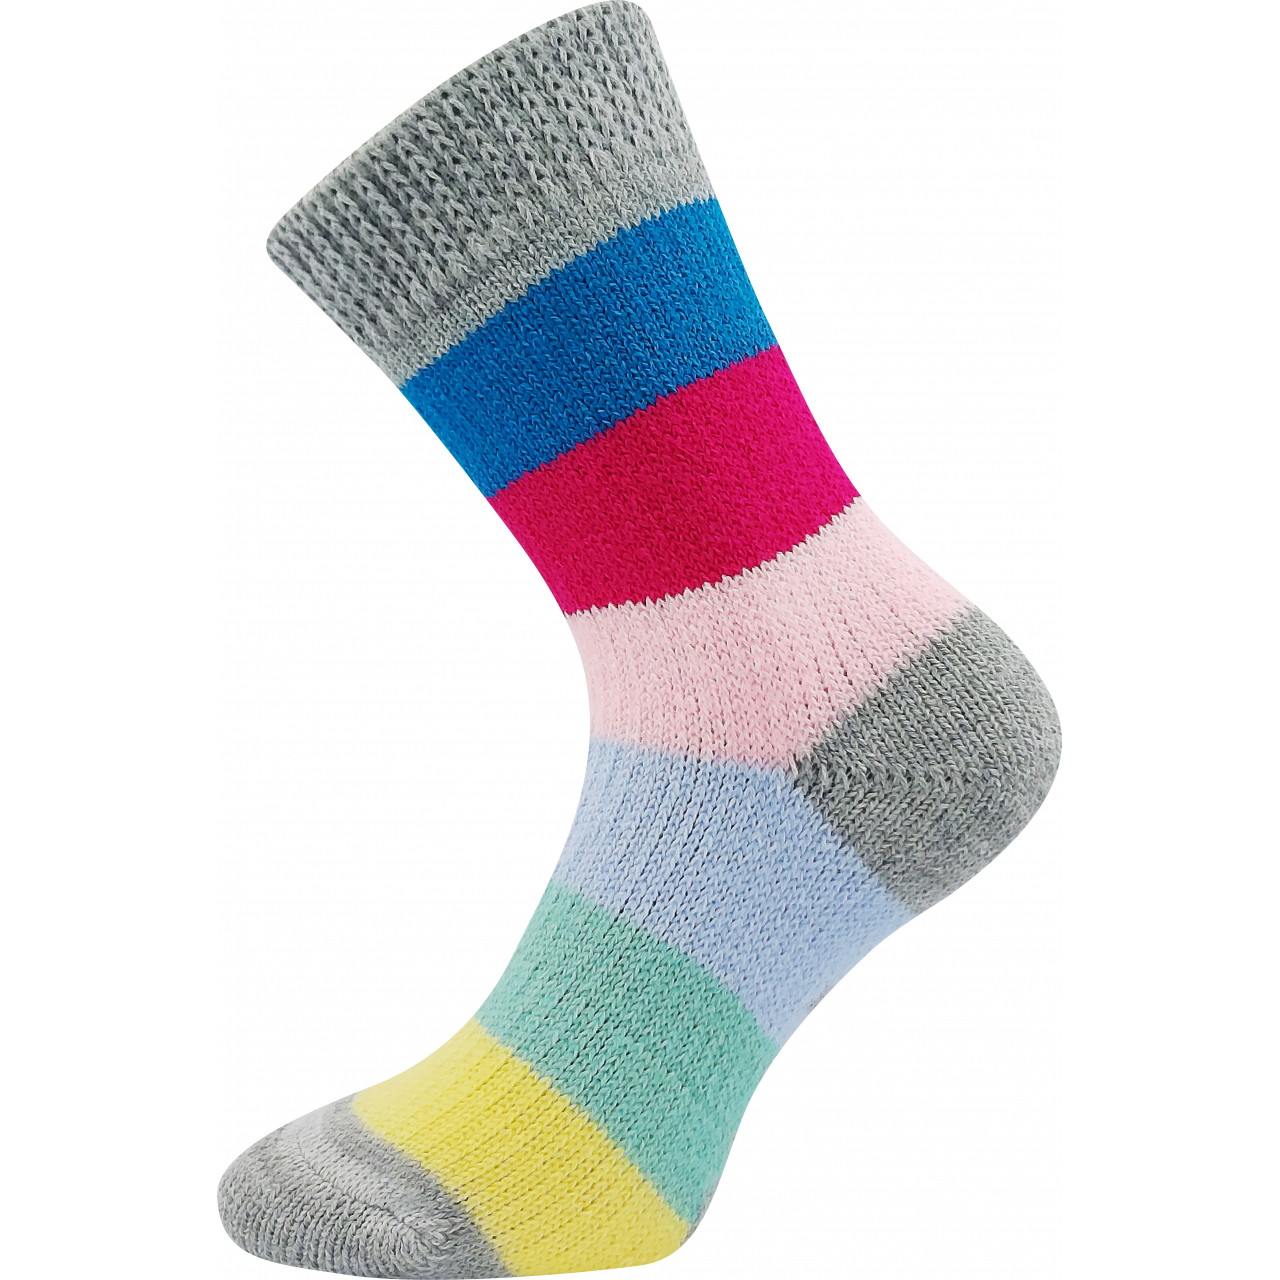 Ponožky spací unisex Boma Spací Pruh 2 - barevné, 35-38